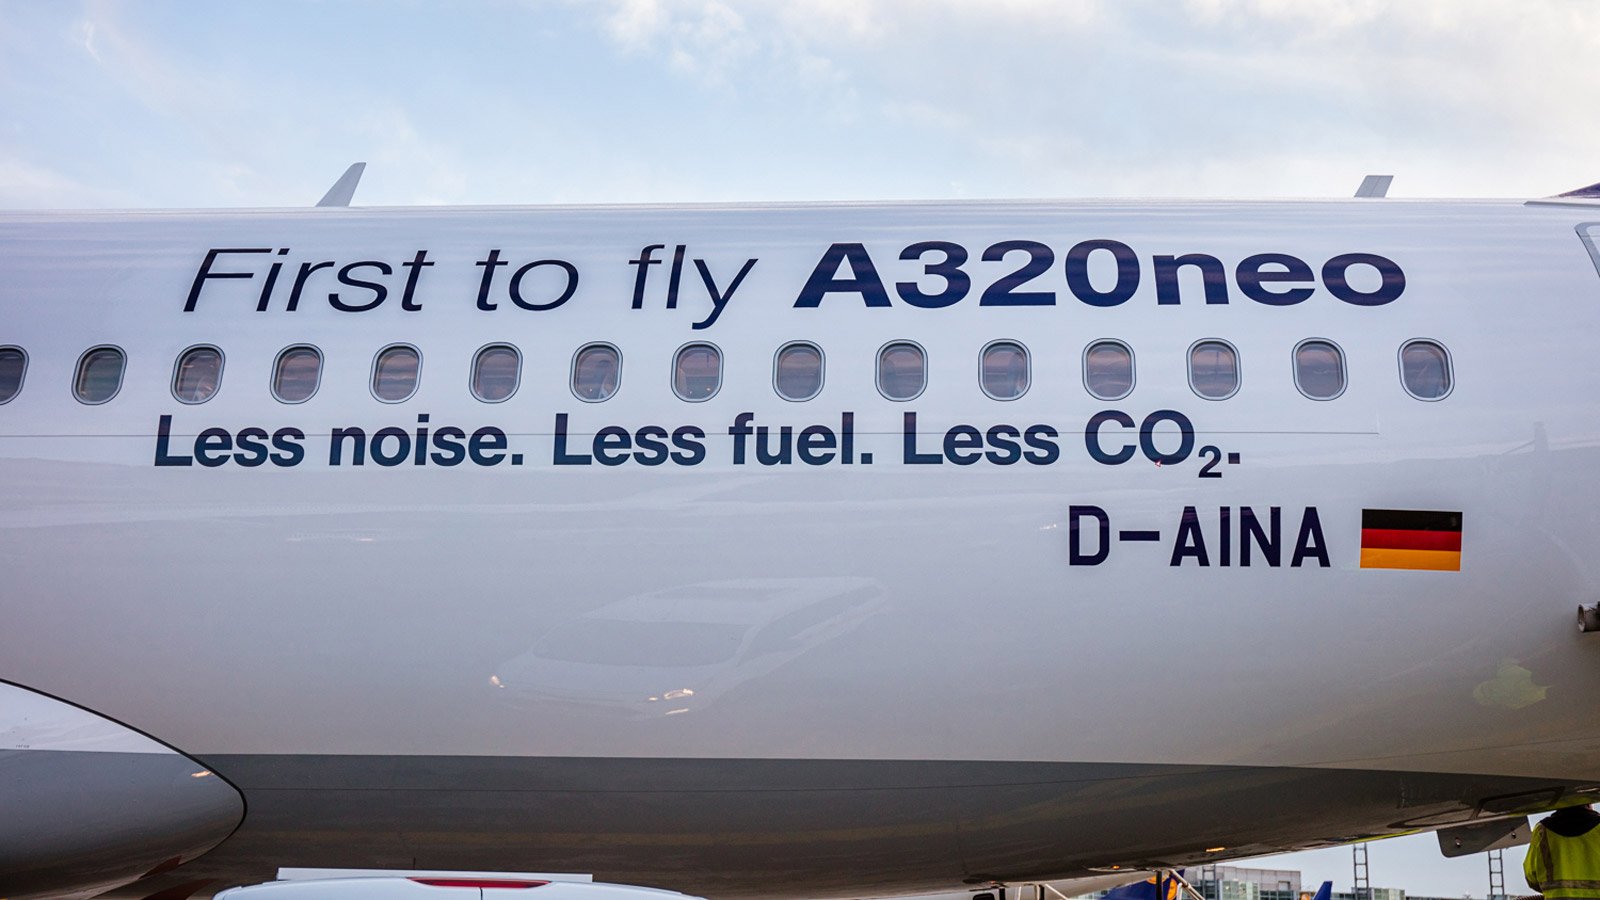 Lufthansa گروپ کو نئی عالمی CDP آب و ہوا کی درجہ بندی میں اچھی درجہ بندی حاصل ہے۔